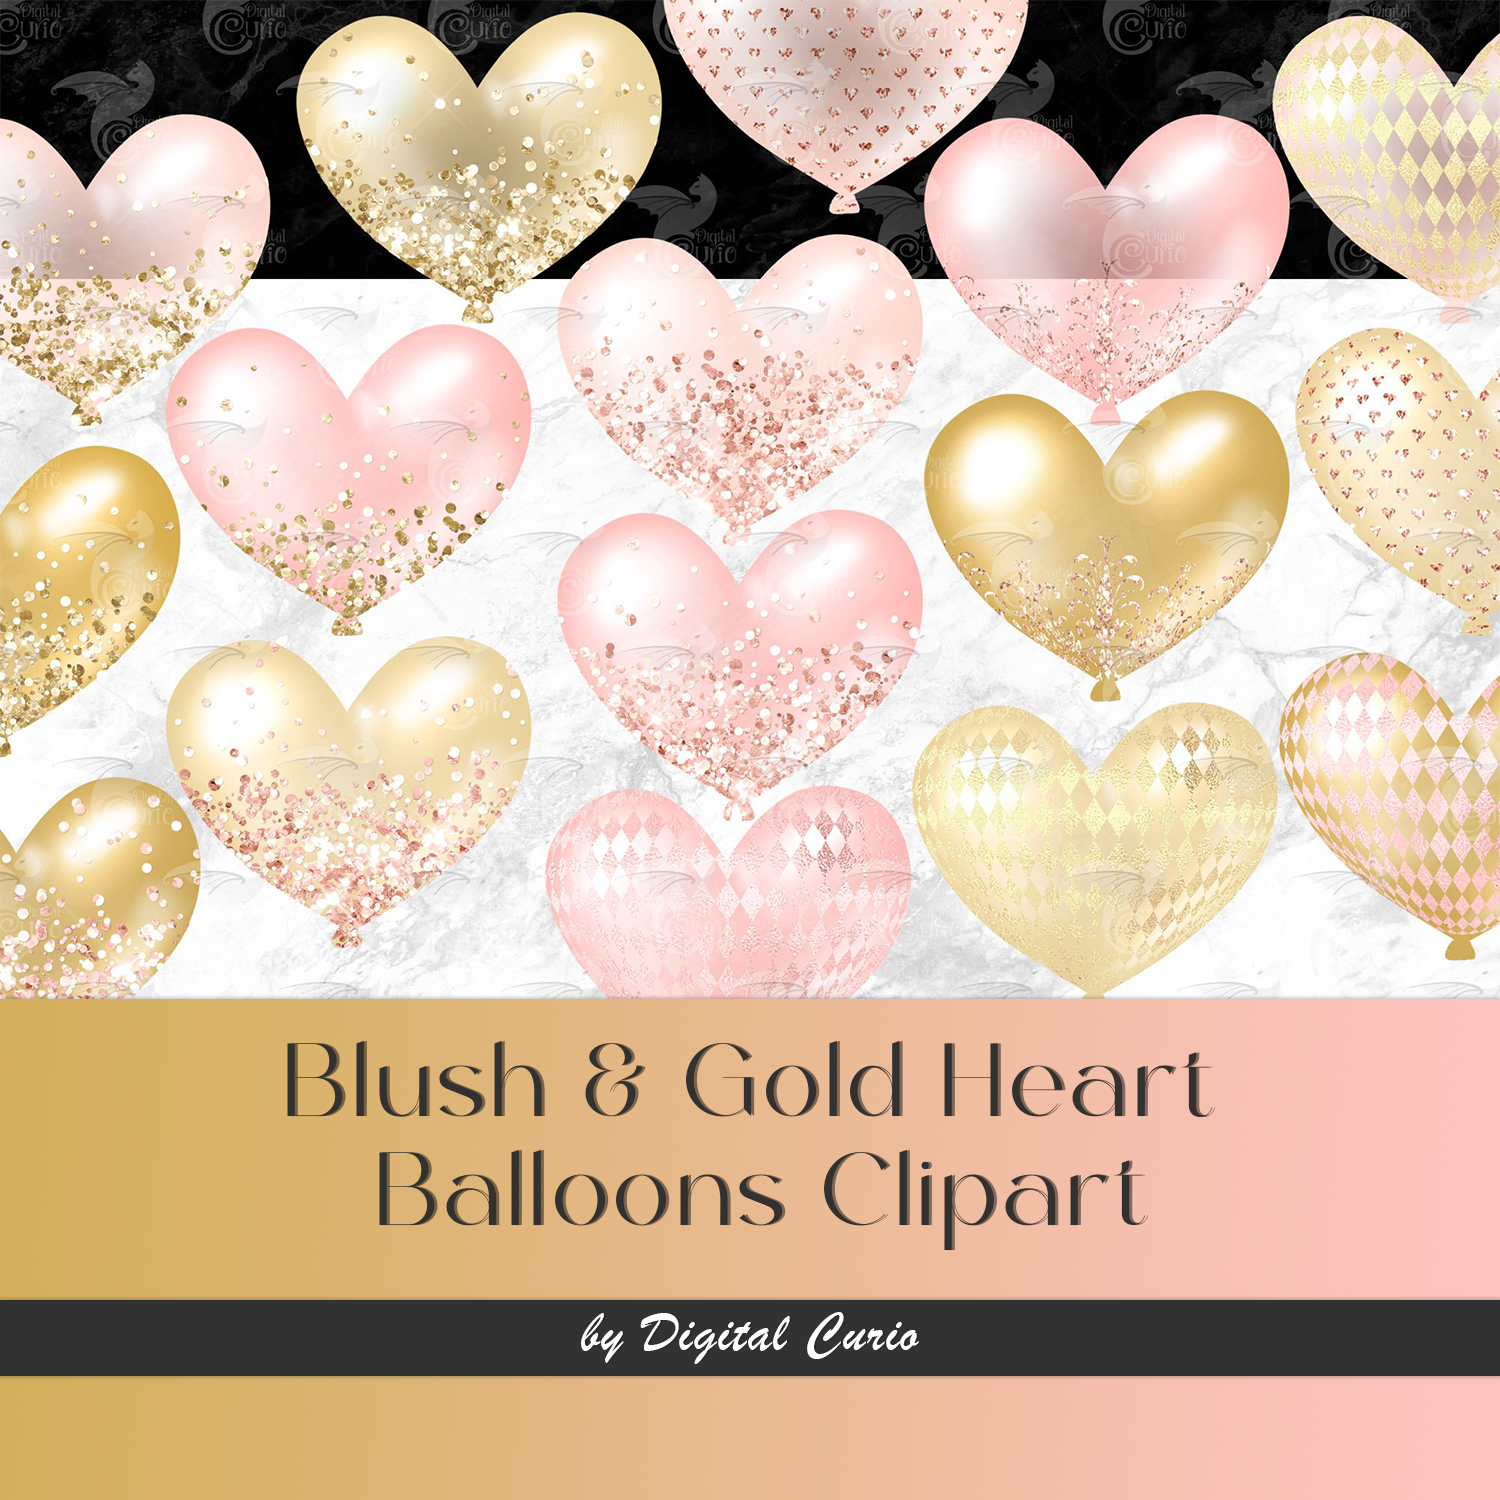 Illustration blush gold heart balloons clipart.